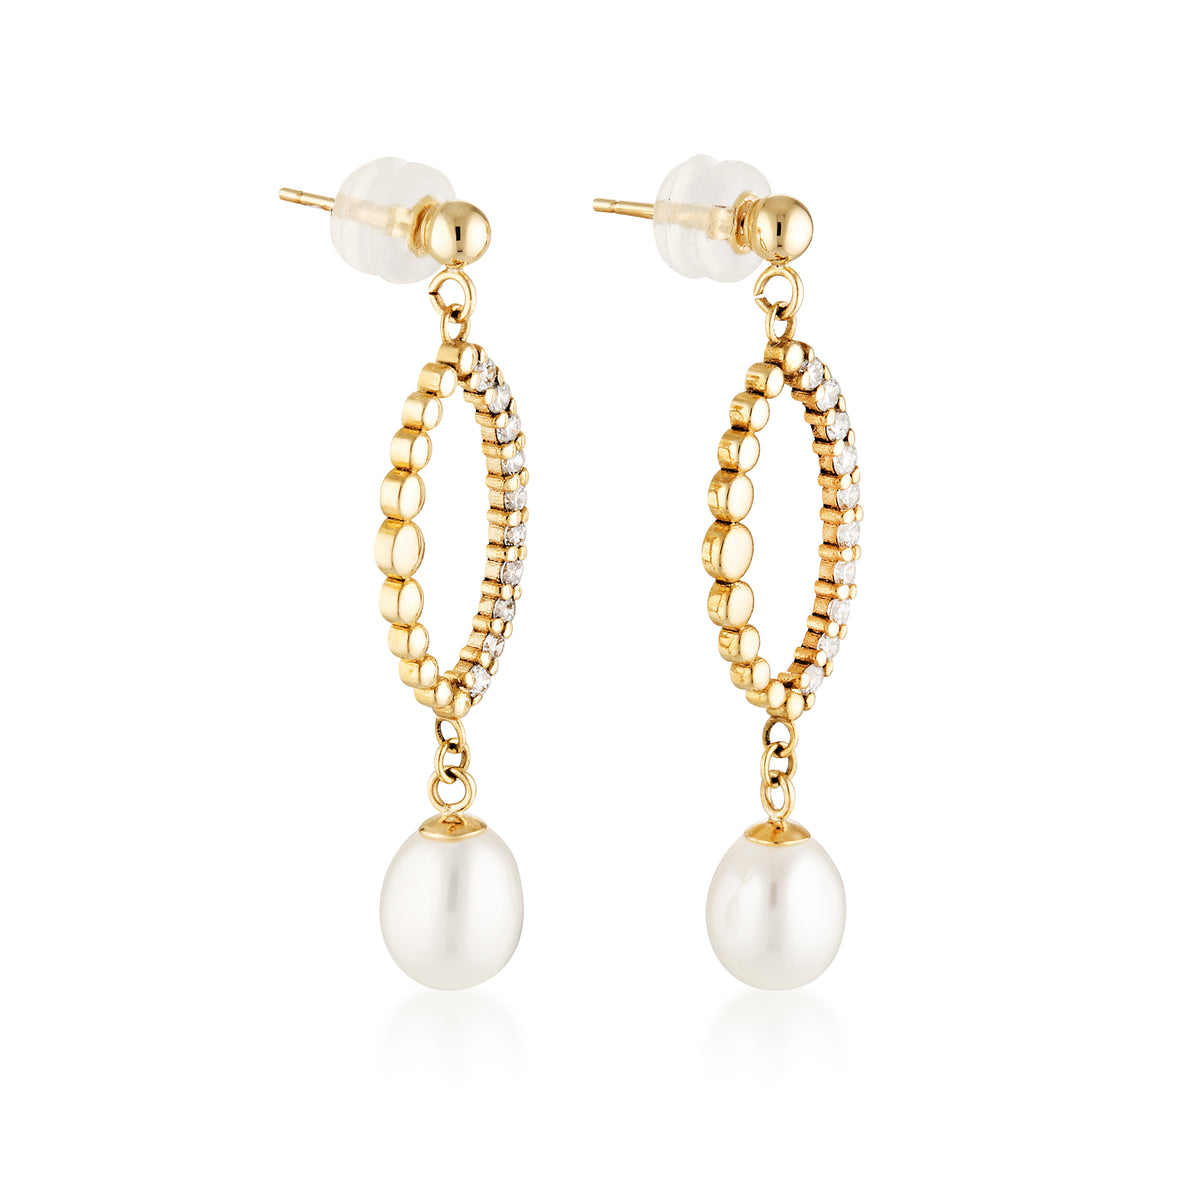 SUNDROP diamond and pearl earrings